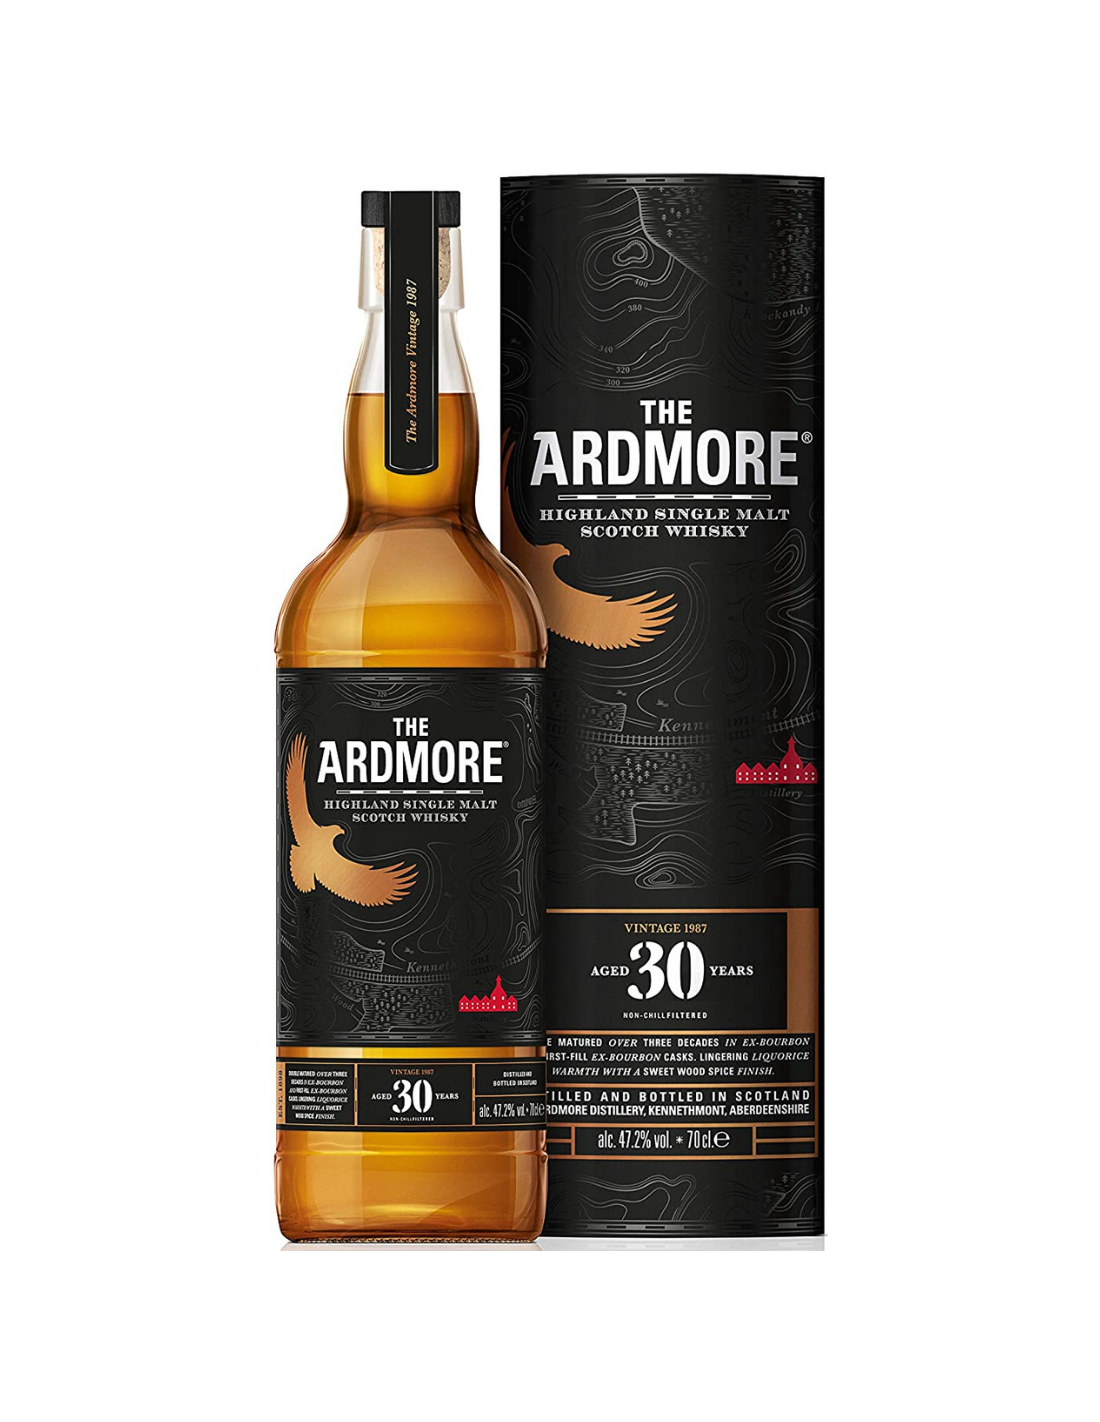 Whisky The Ardmore 30 Years Old Single Malt Scotch, 0.7L, 47.2% alc., Marea Britanie alcooldiscount.ro